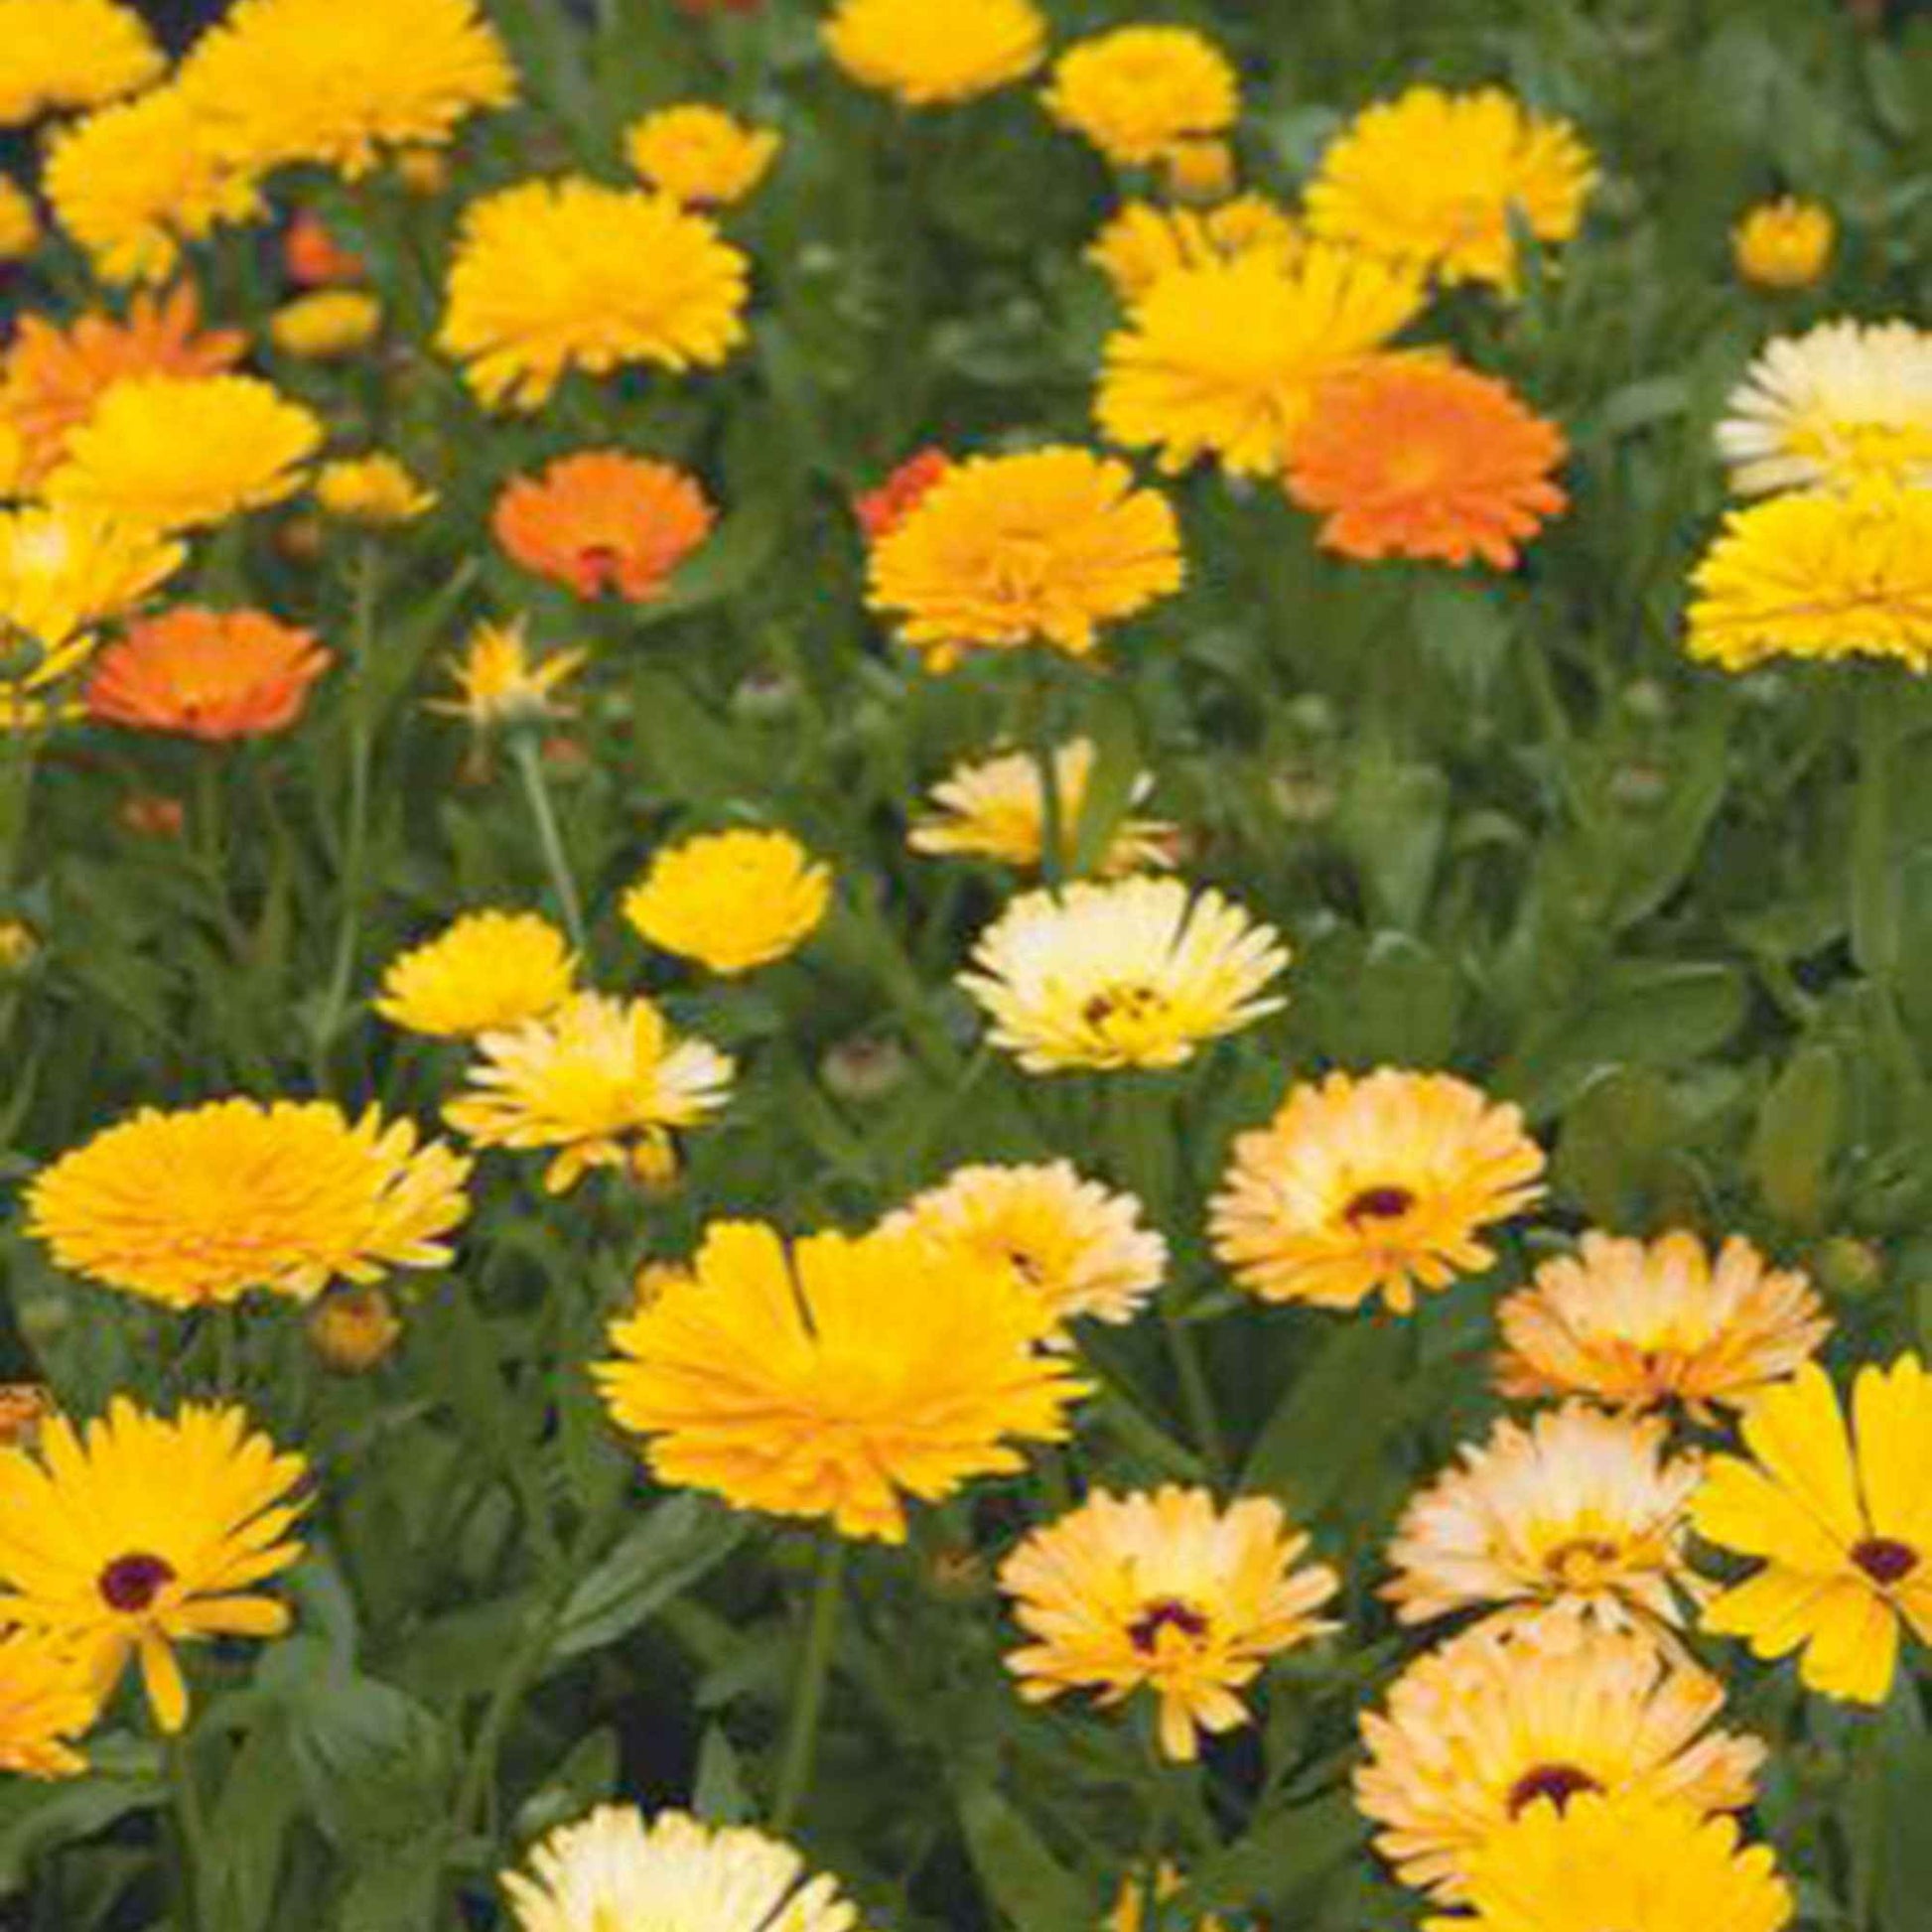 Marigold Calendula 'Pacific Beauty' - Mischung gelb-orange-weiβ 2,5 m² - Blumensamen - Blumensaat